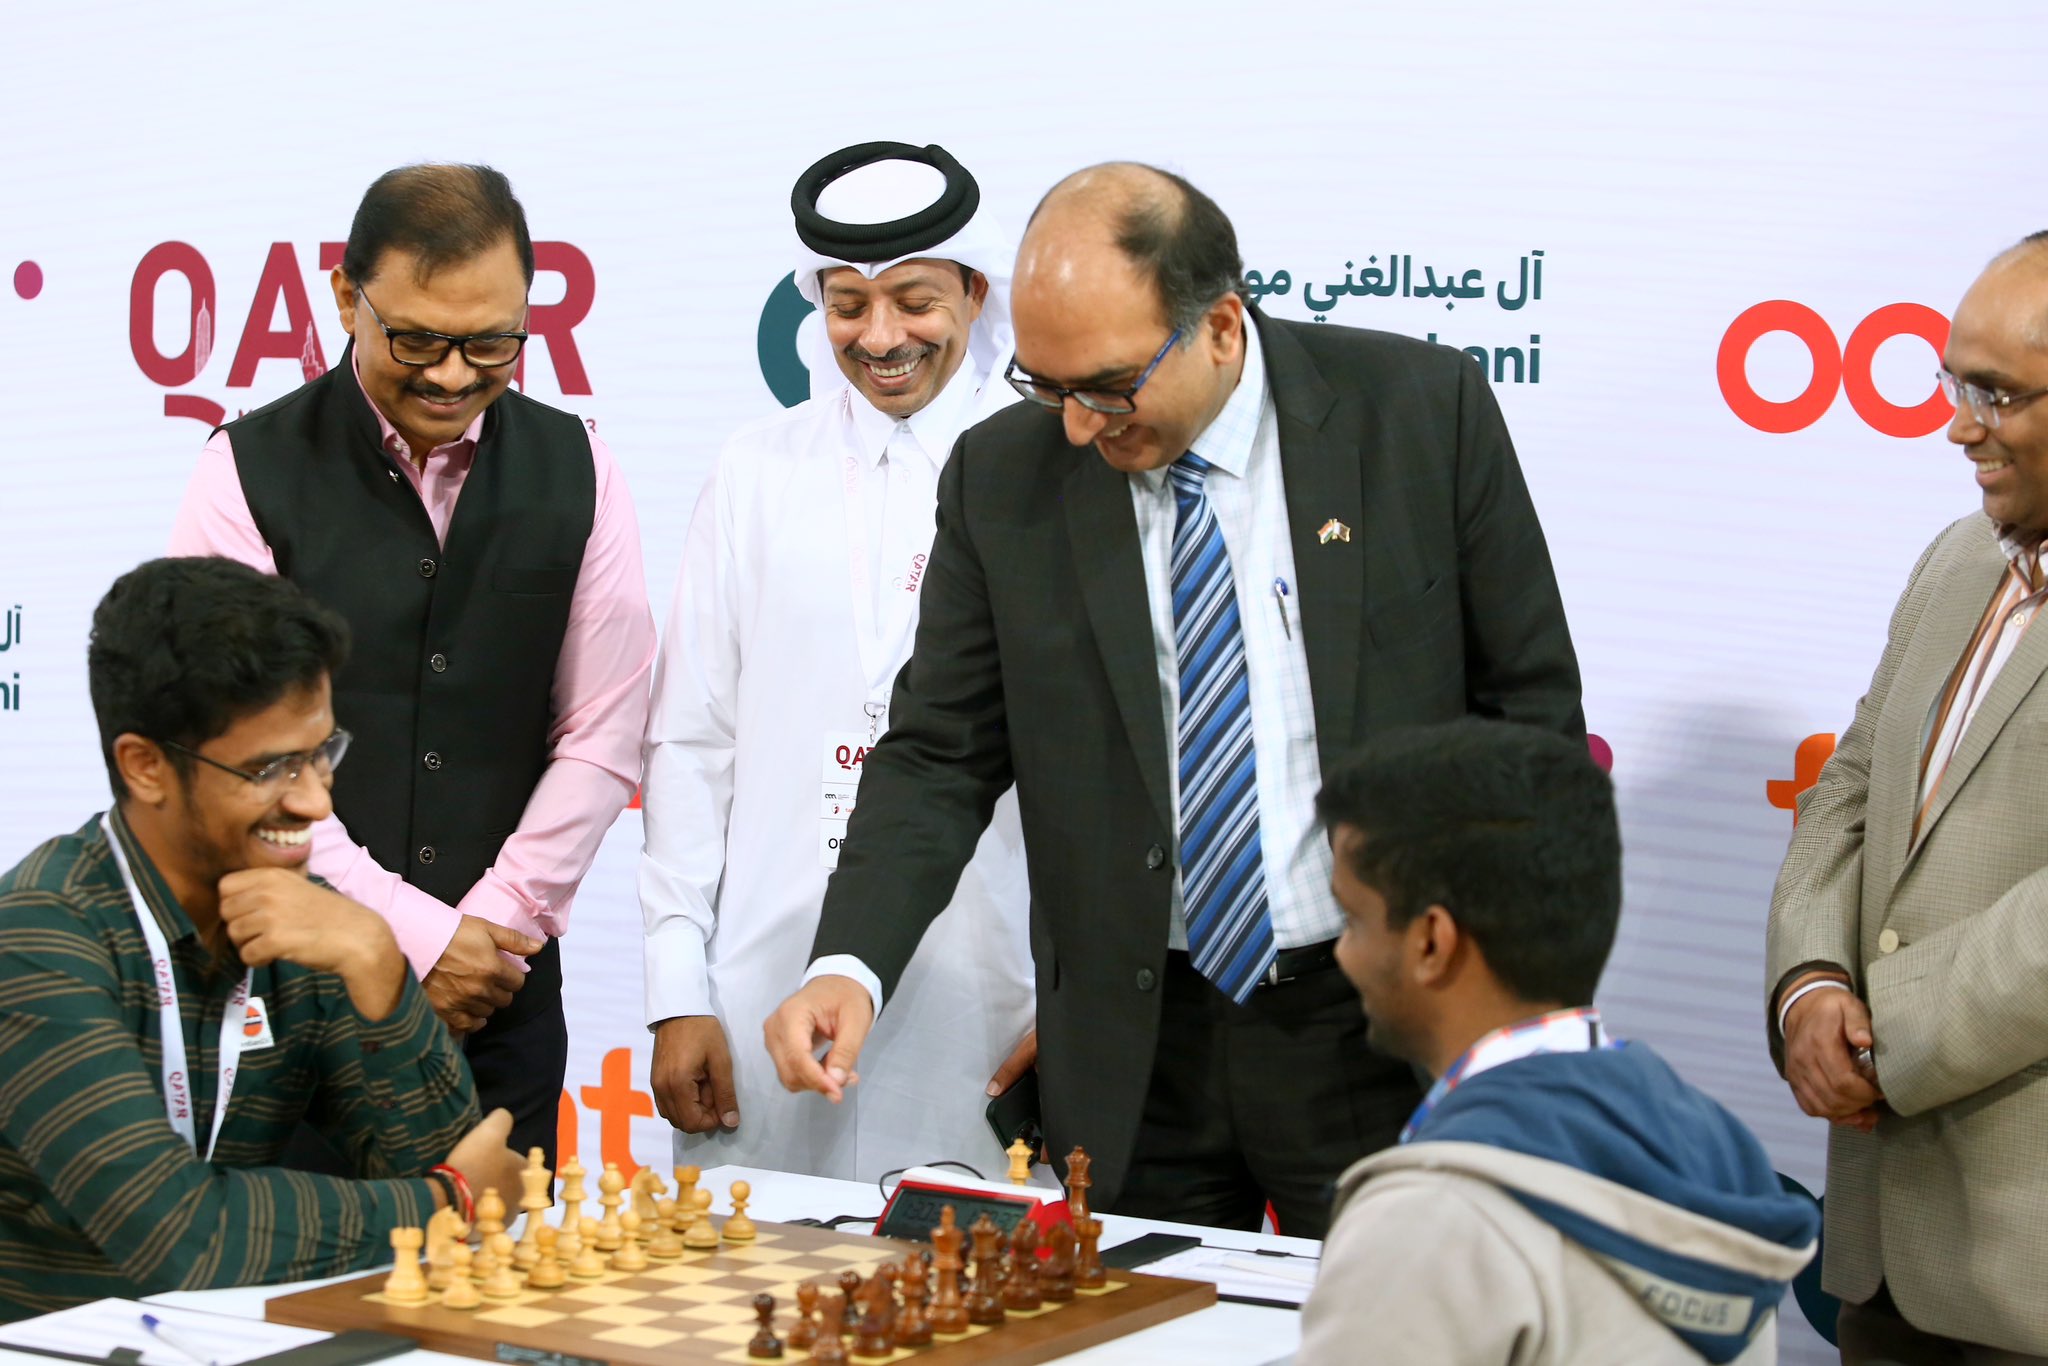 Qatar Masters: Arjun enters final round as sole leader